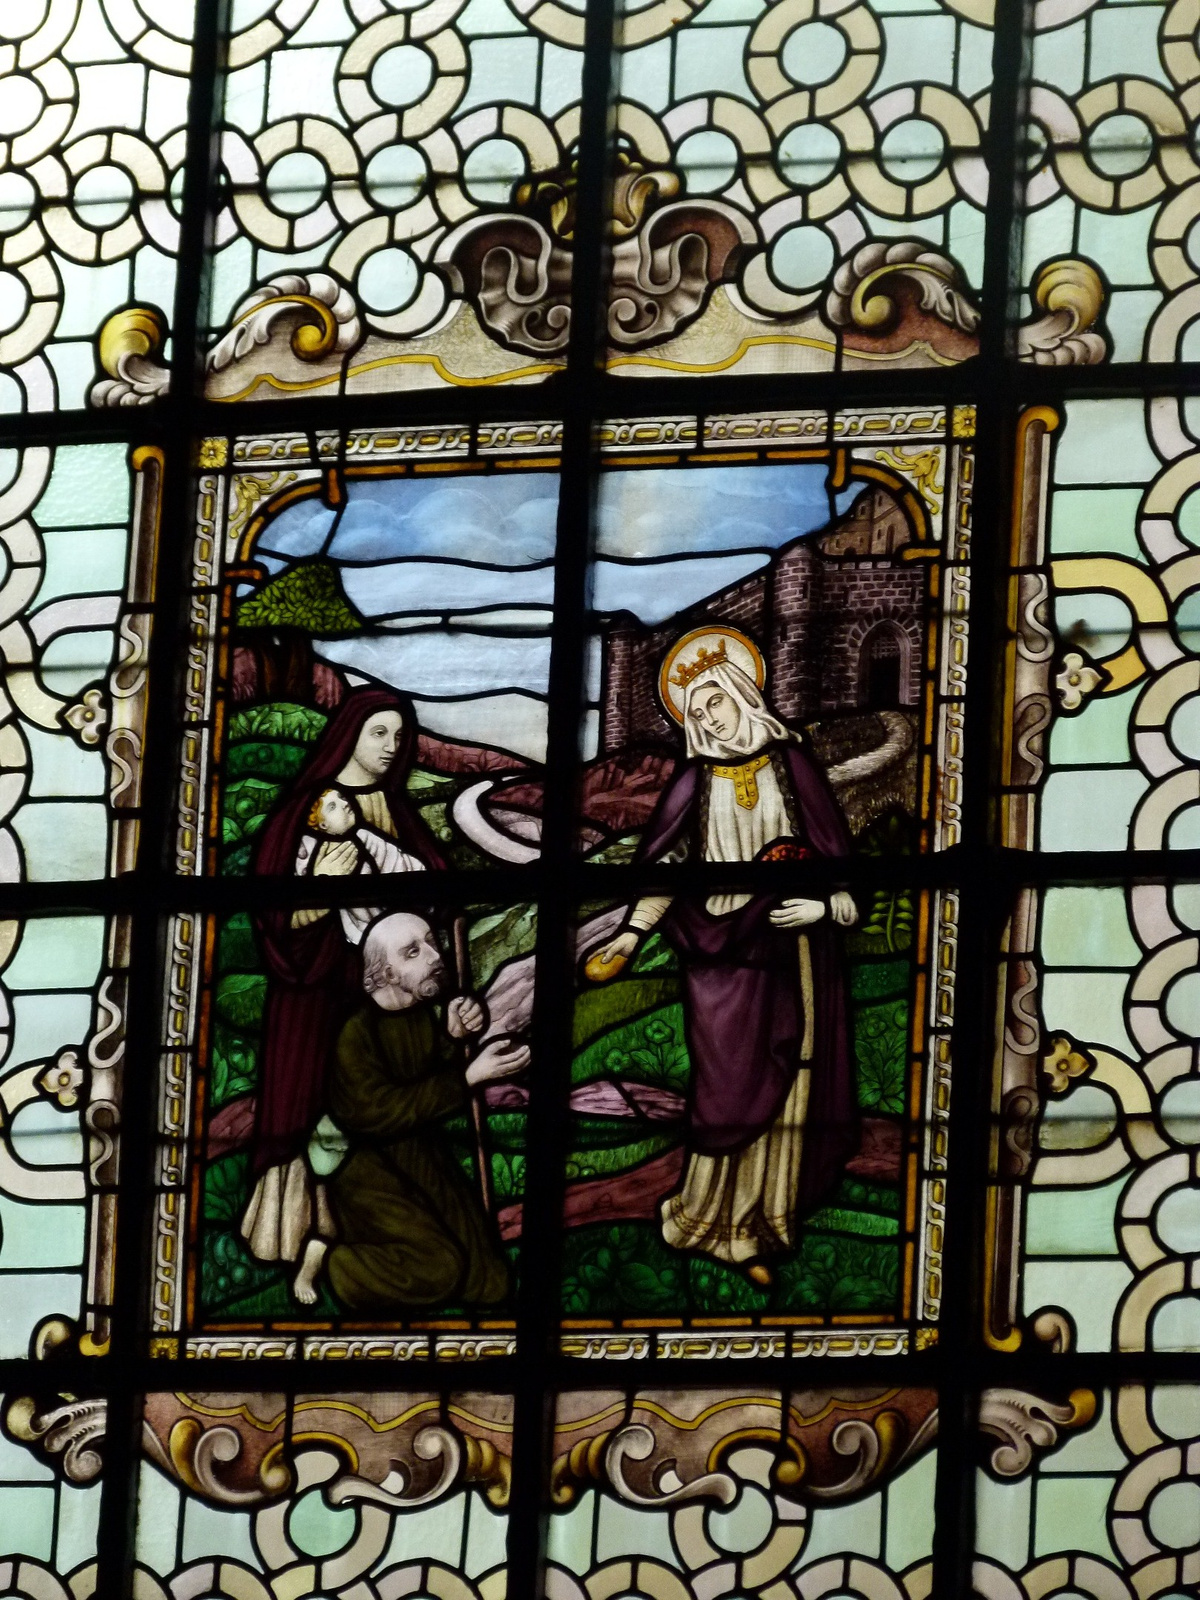 Brugge - kolostor templomának ablaka (P1280264)